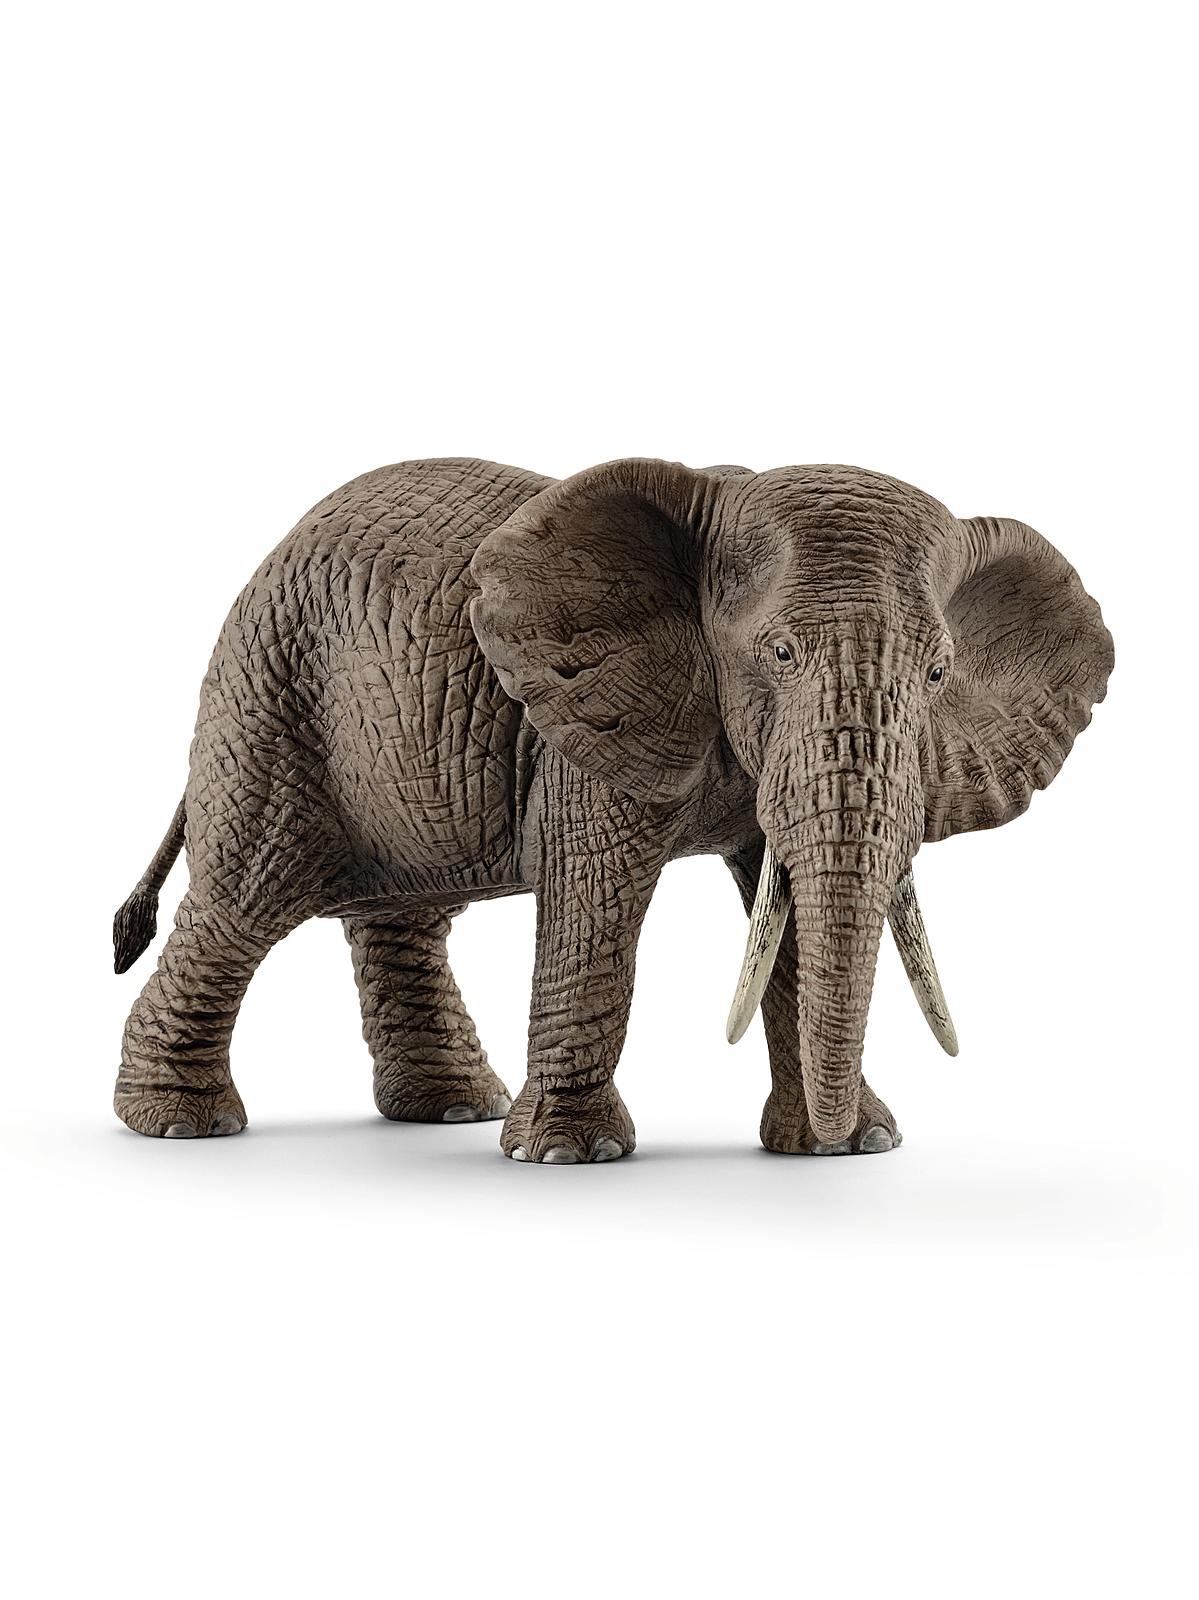 African Elephant Female